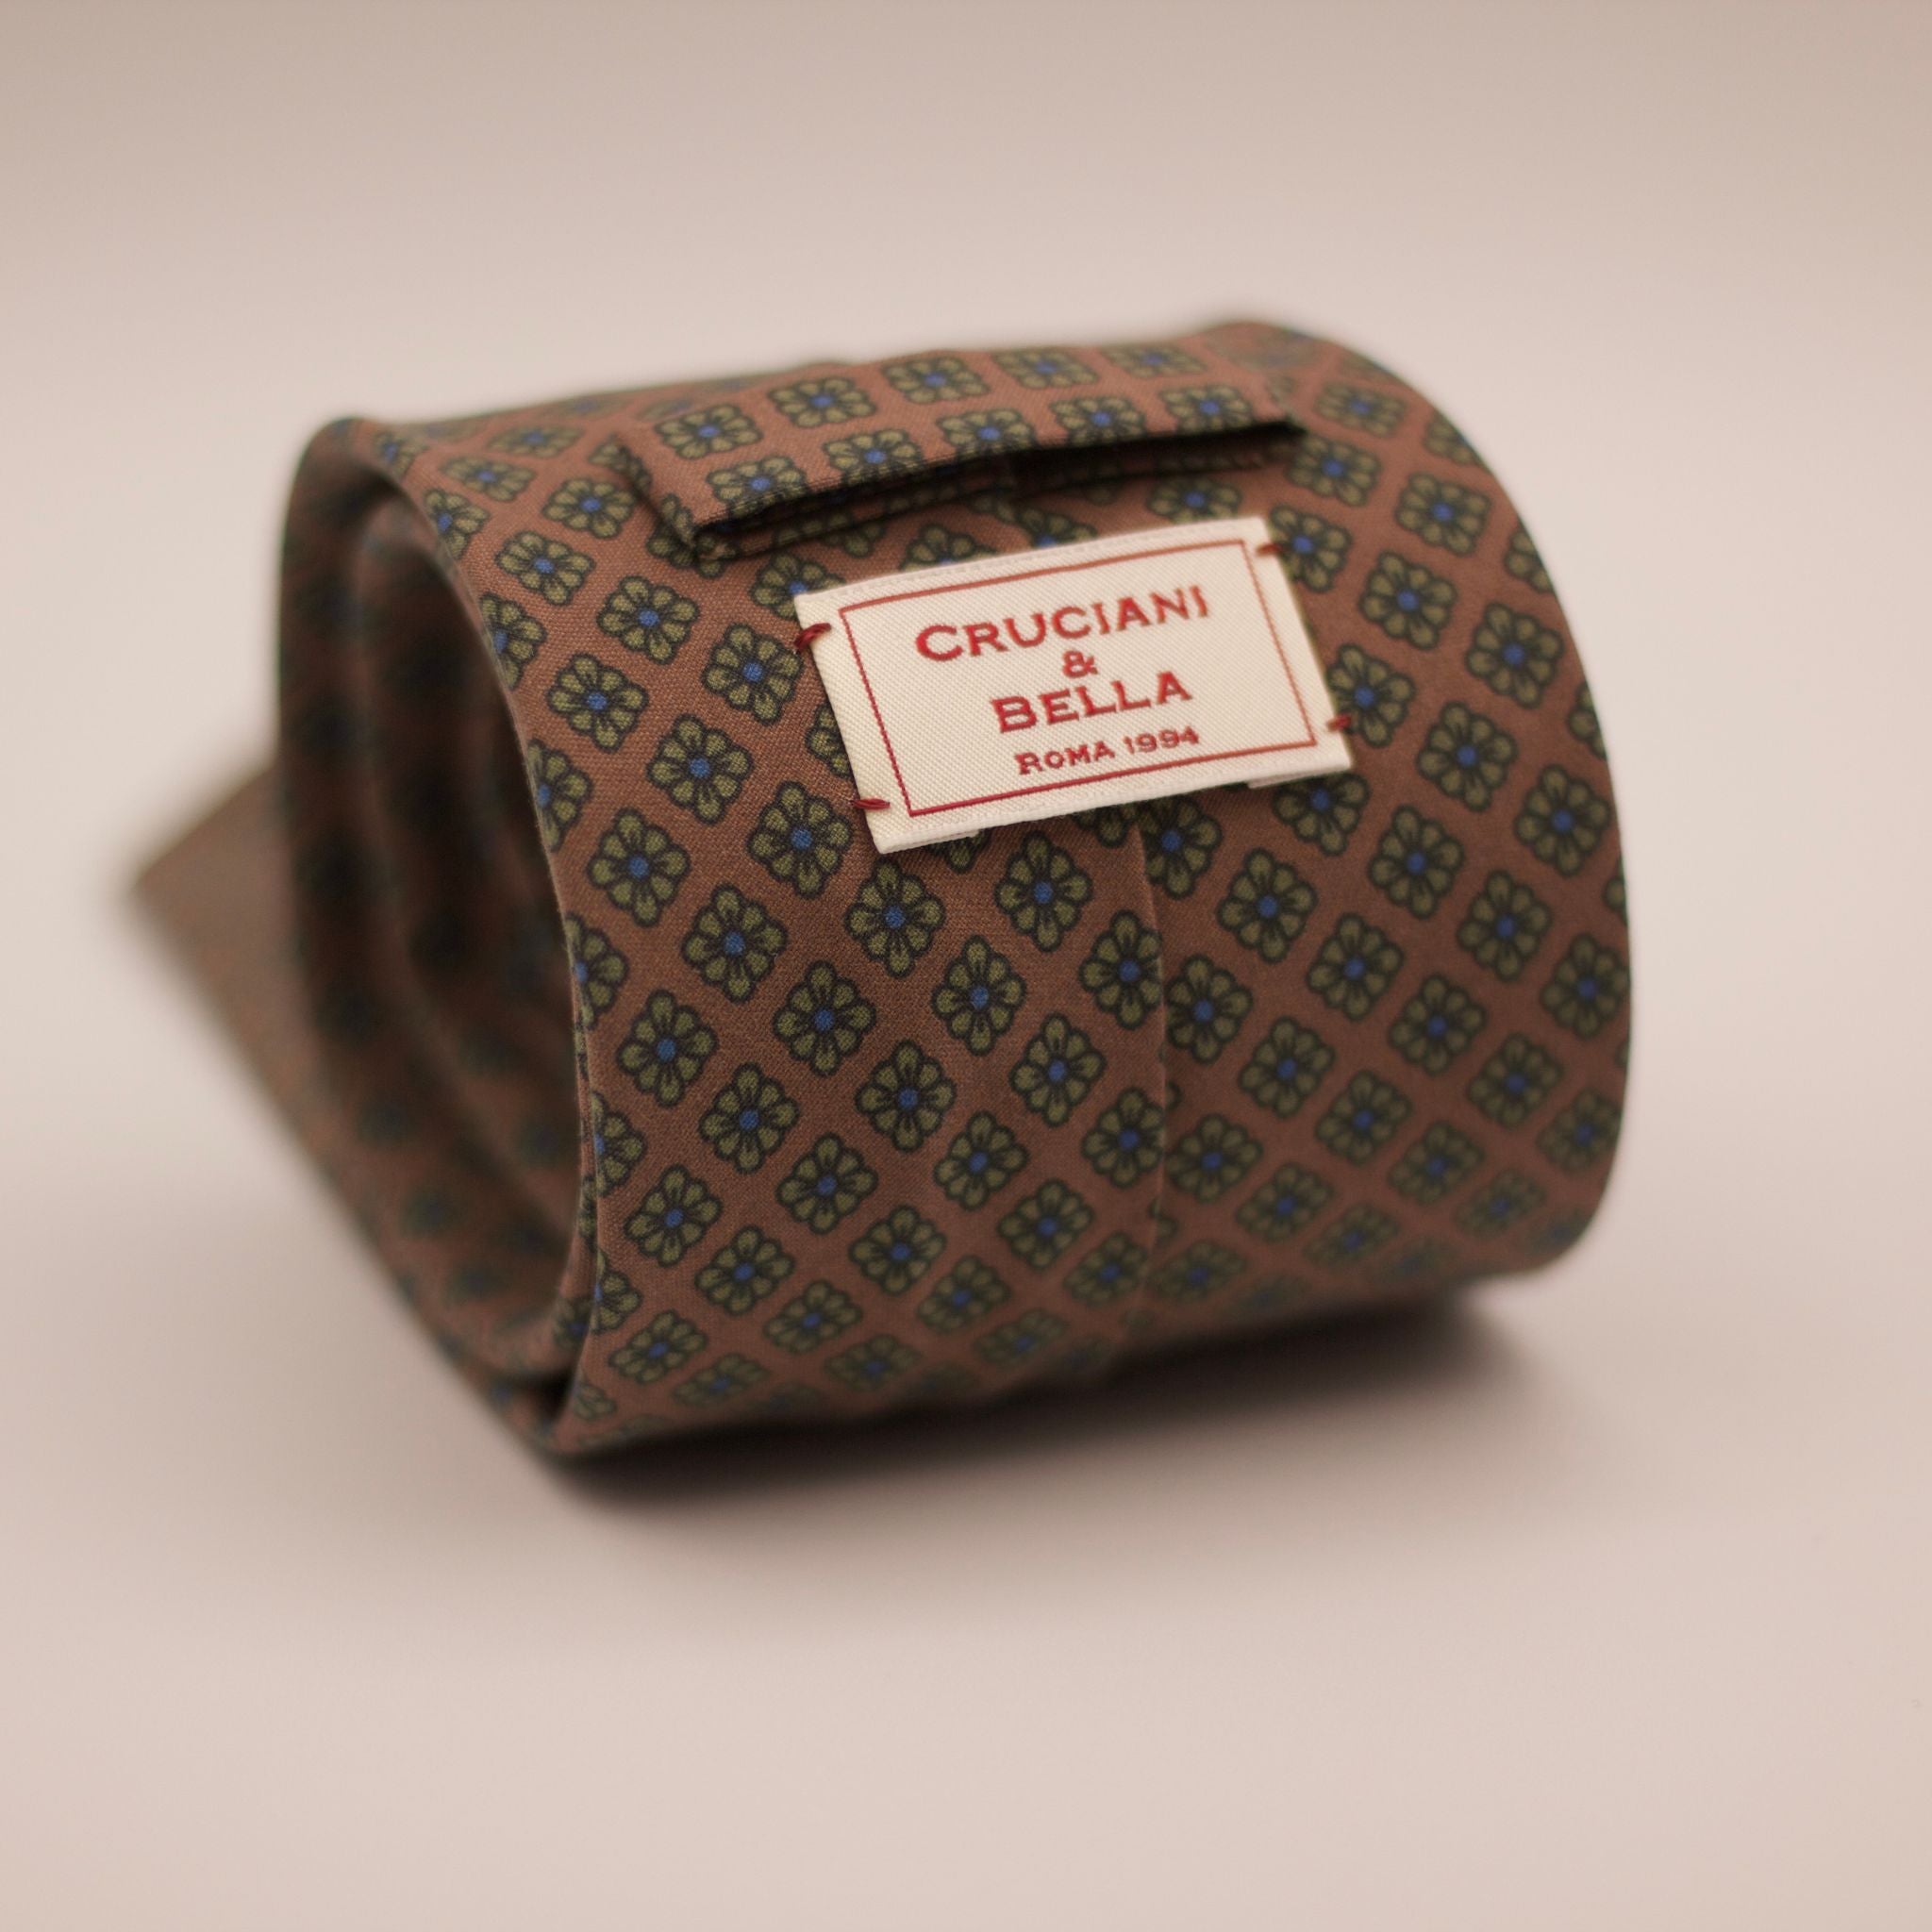 Cruciani & Bella  100% Printed Madder Silk  Italian fabric  Unlined tie Orange, Green floral  motif  8 cm x 150 cm #5948